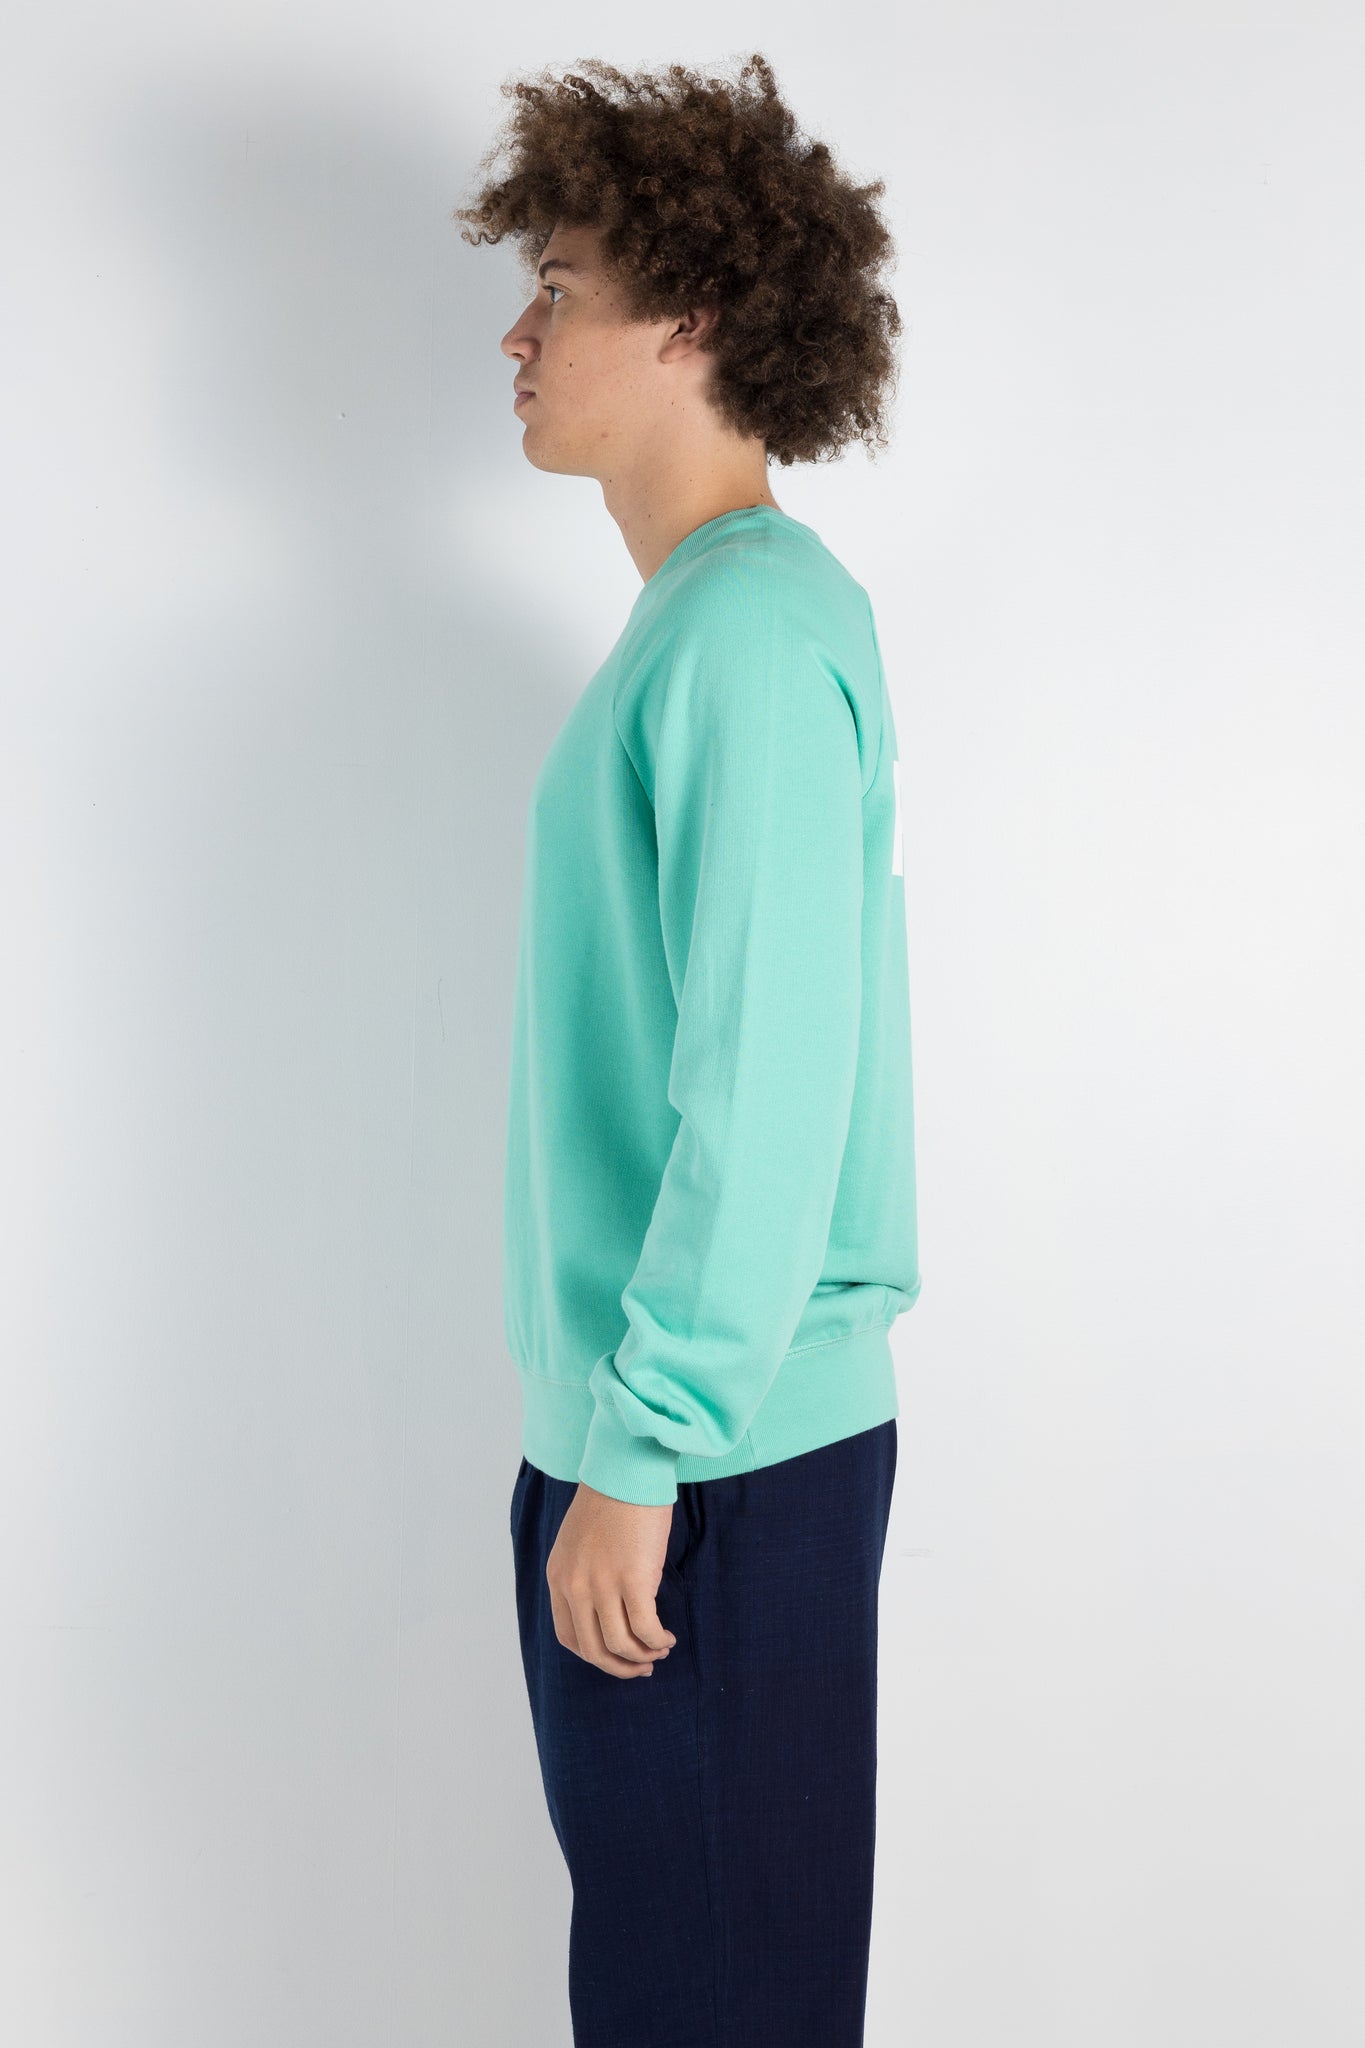 Mens Sweatshirt | La Paz Cunha Sweatshirt | The standard Store